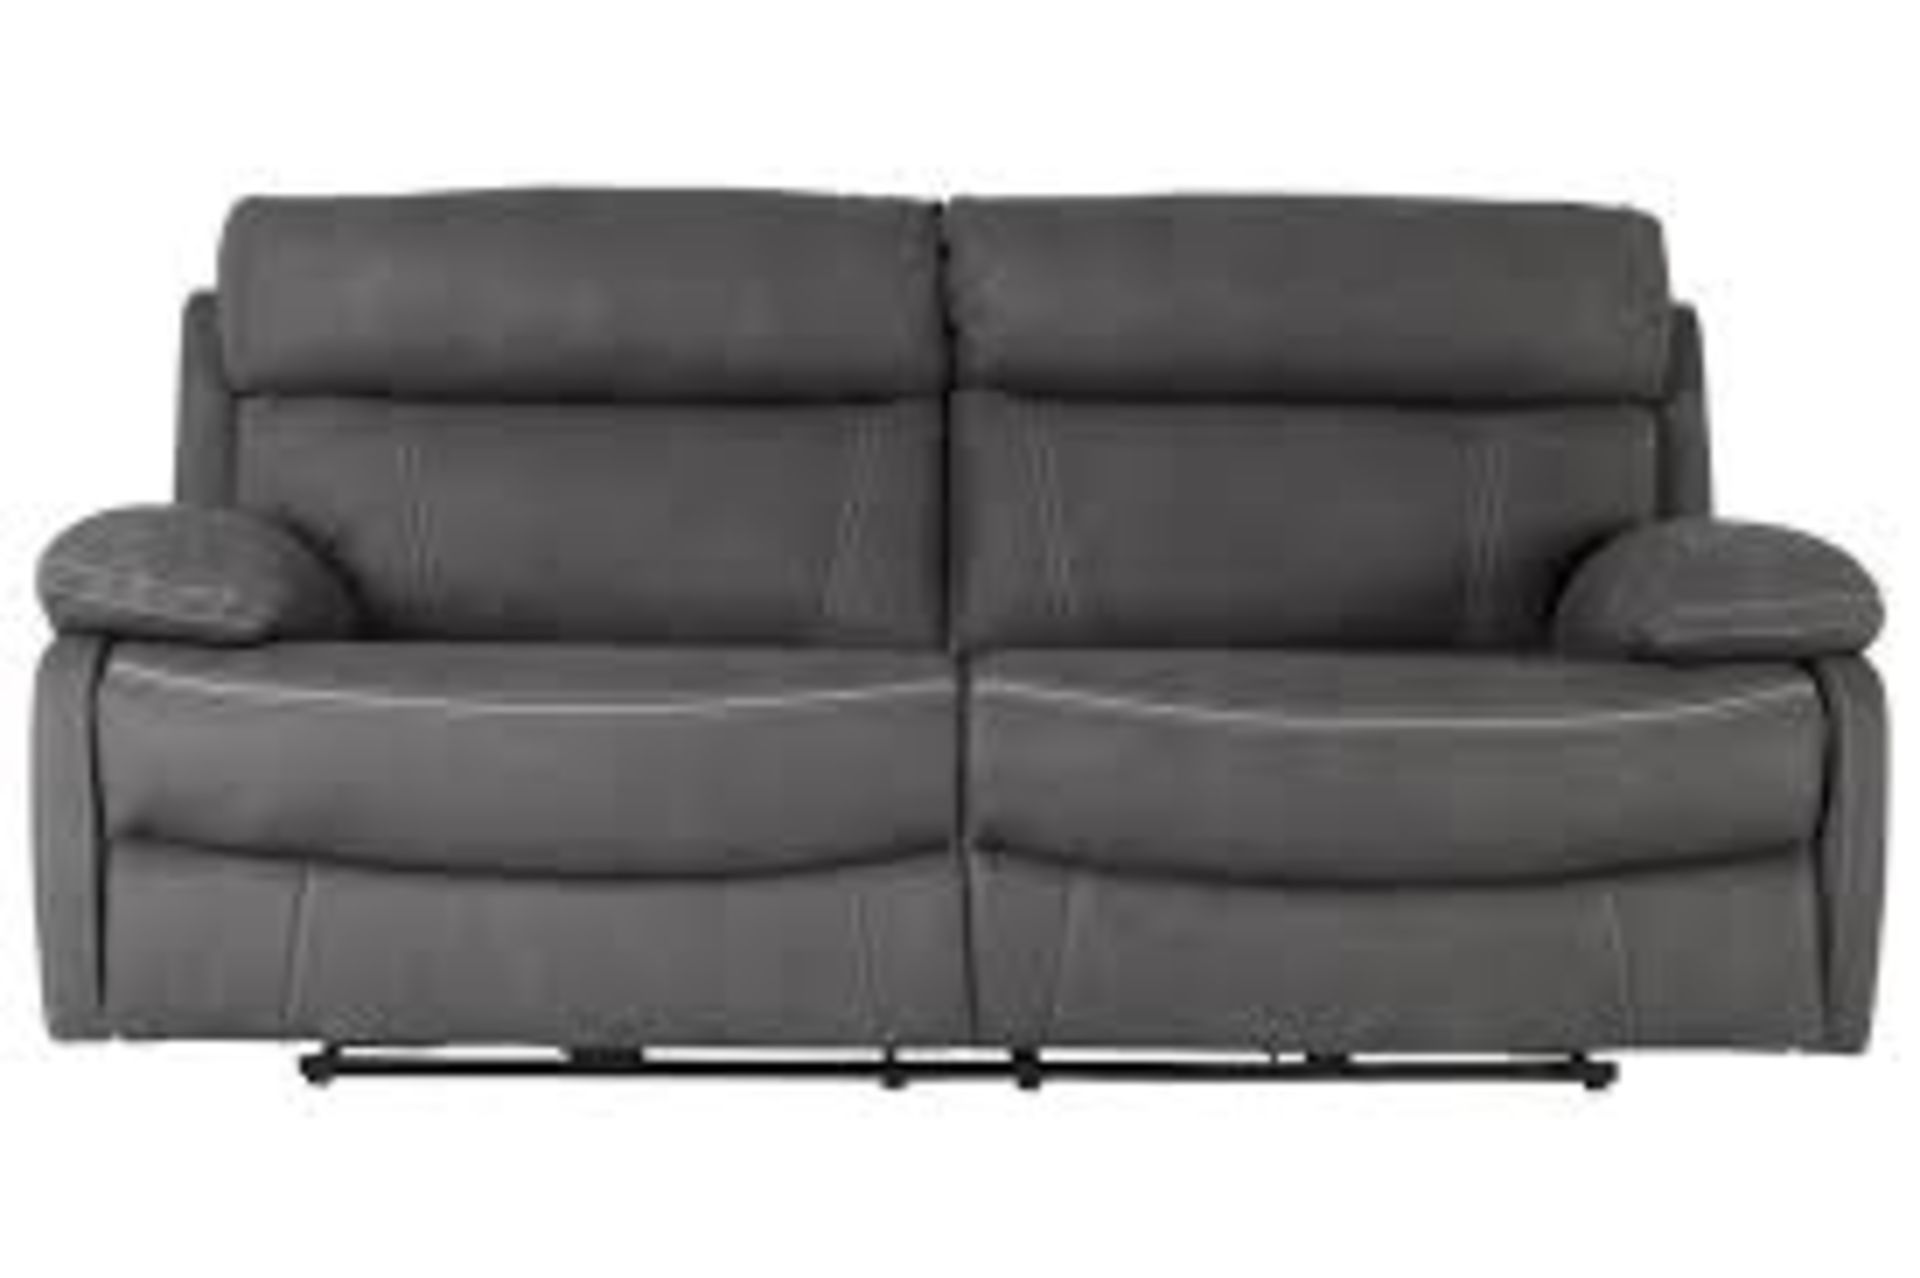 Brand New Boxed Arlo Manual Reclining 3 Seater Sofa In Grey Fabric